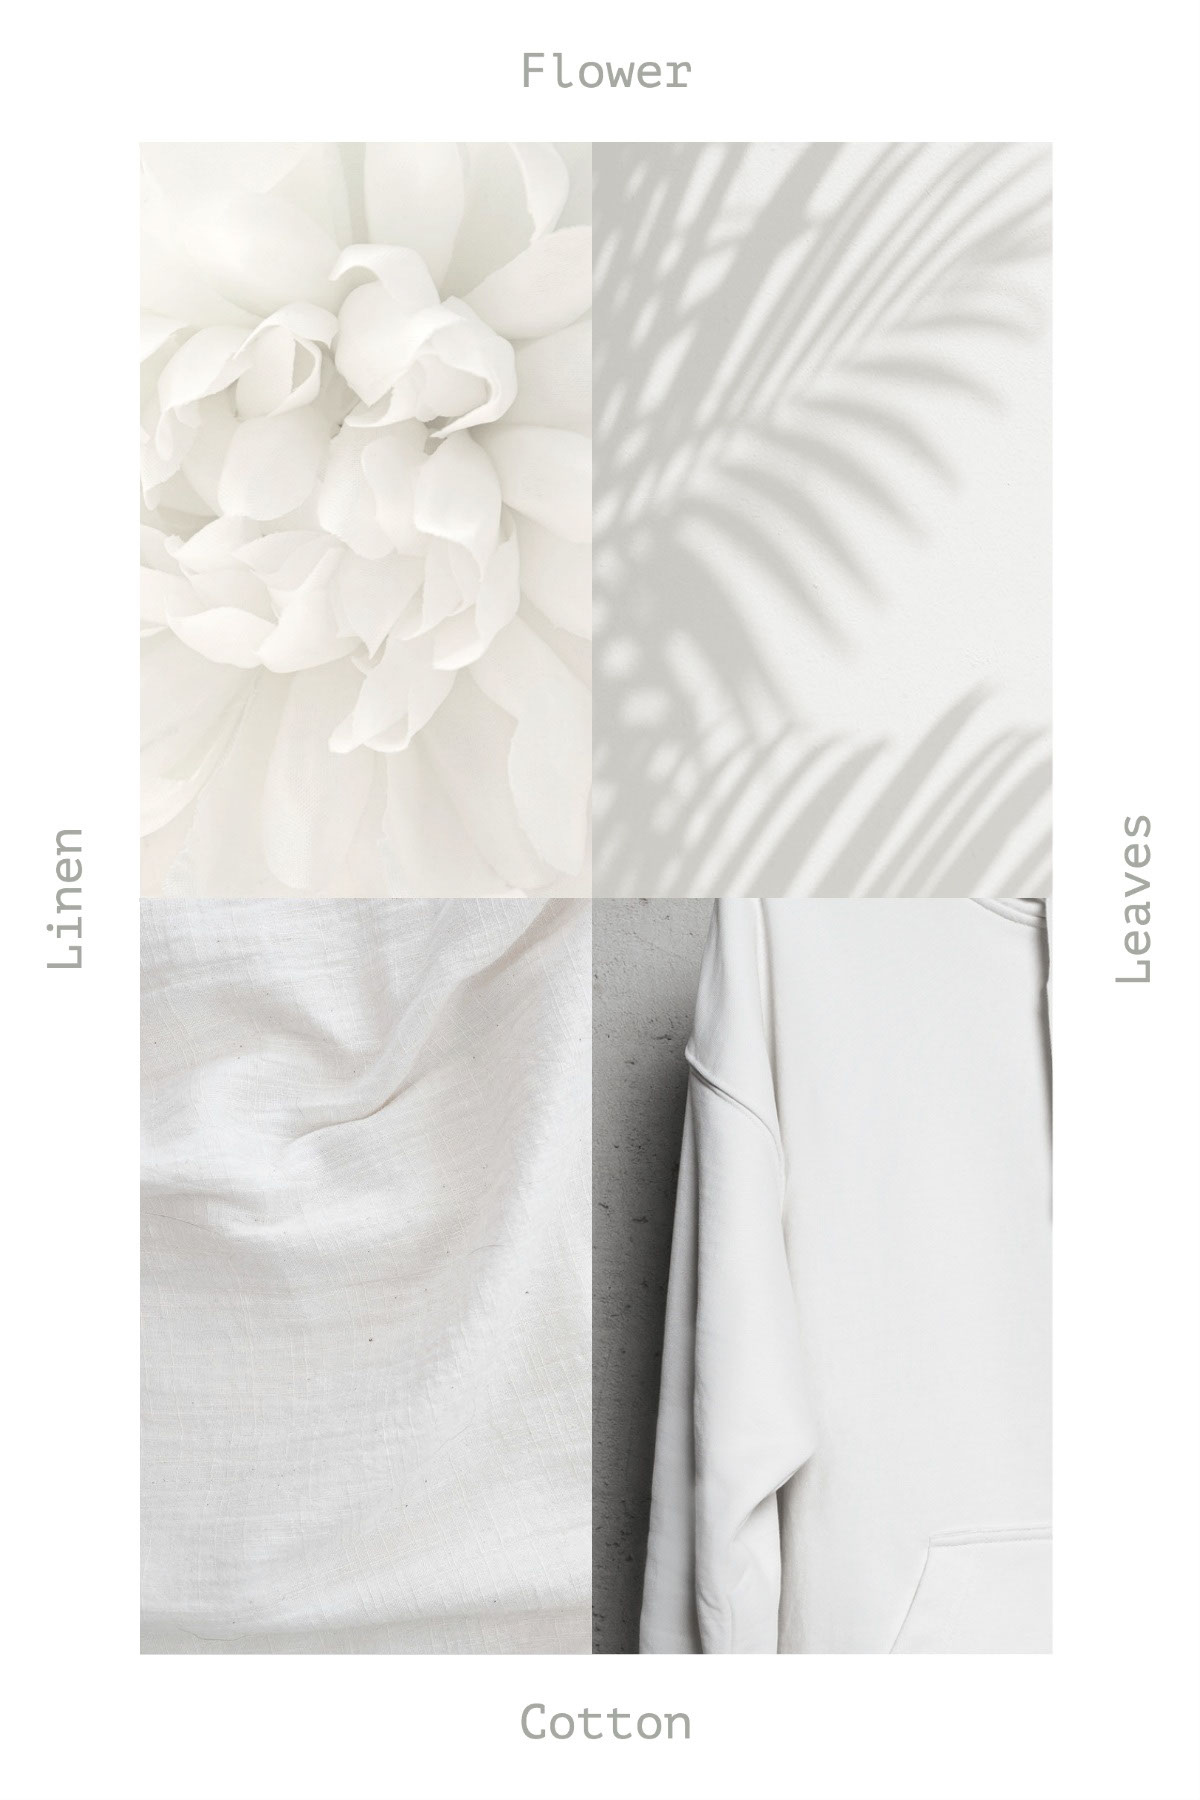 Grey Minimal Calm Mood Board Pinterest Post Leaves Cotton Linen Flower